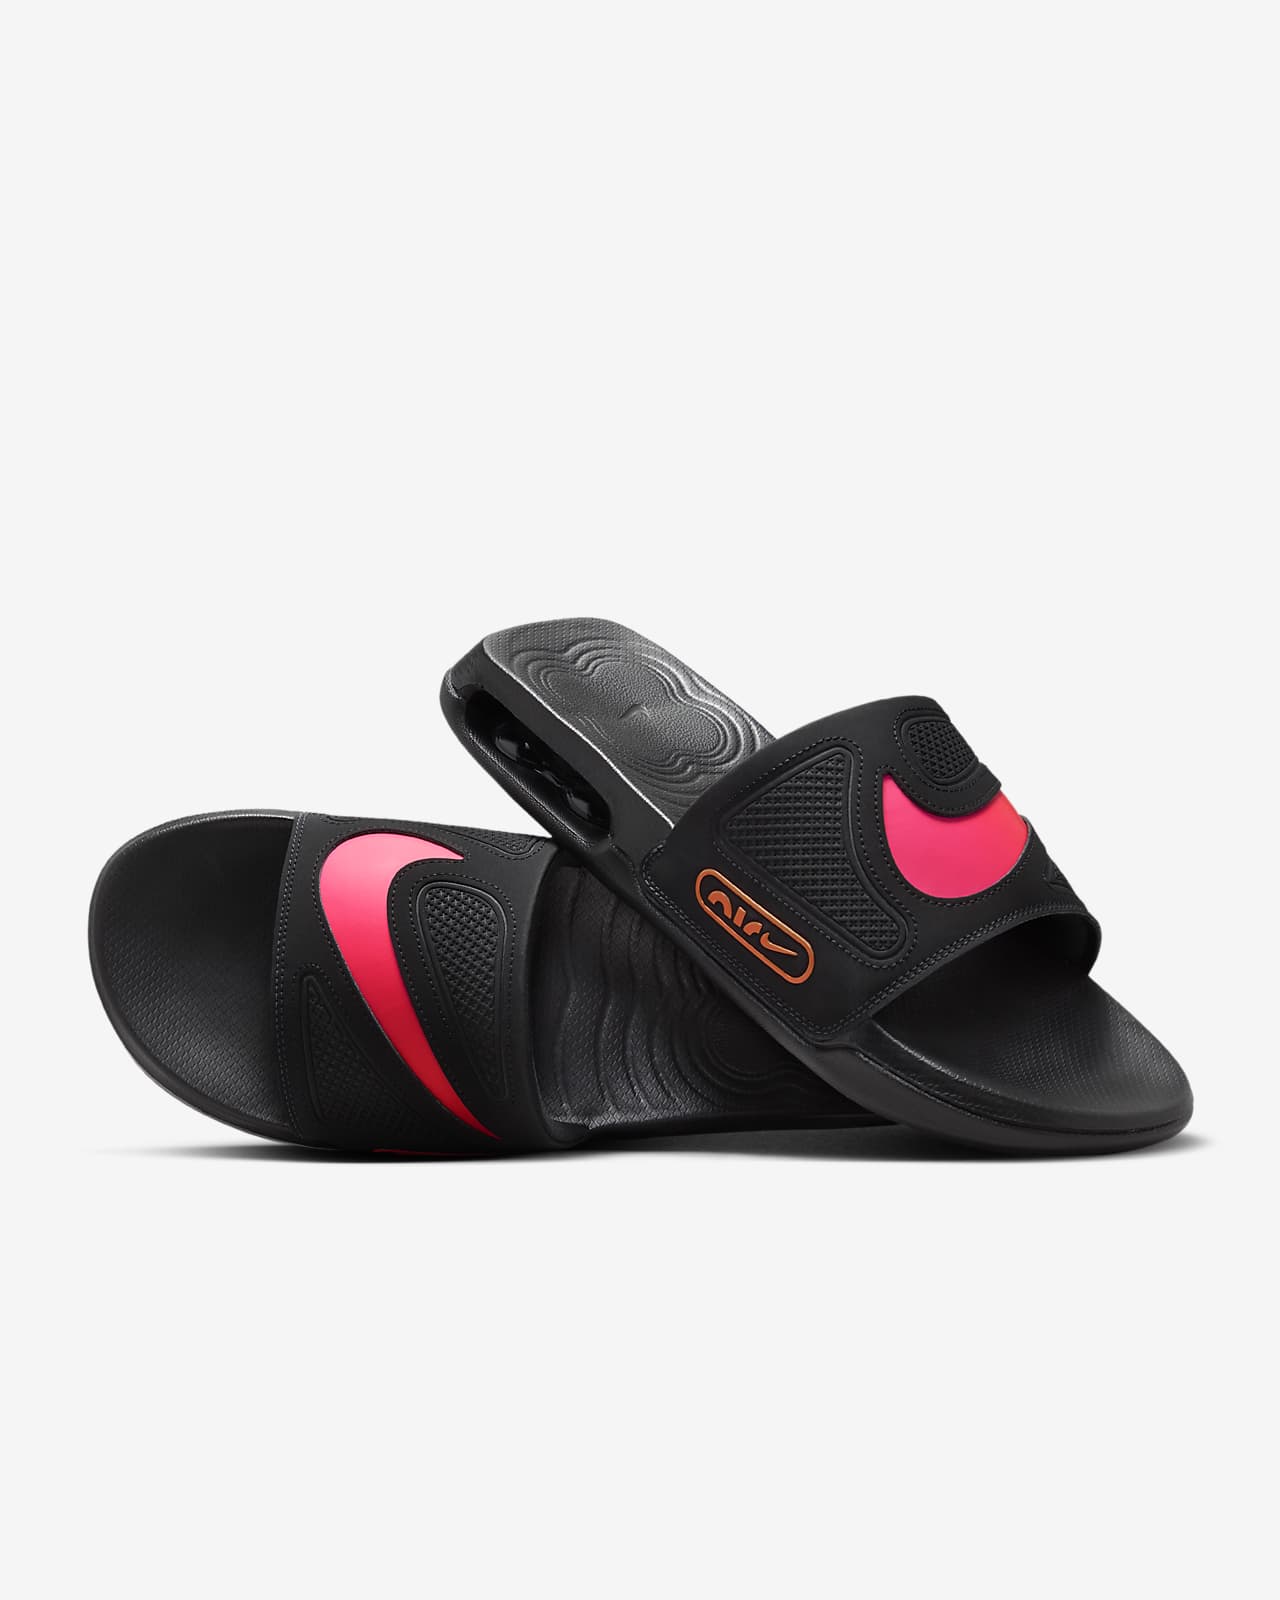 Nike Jordan Super Play Slide Men Shoes Sandals India | Ubuy